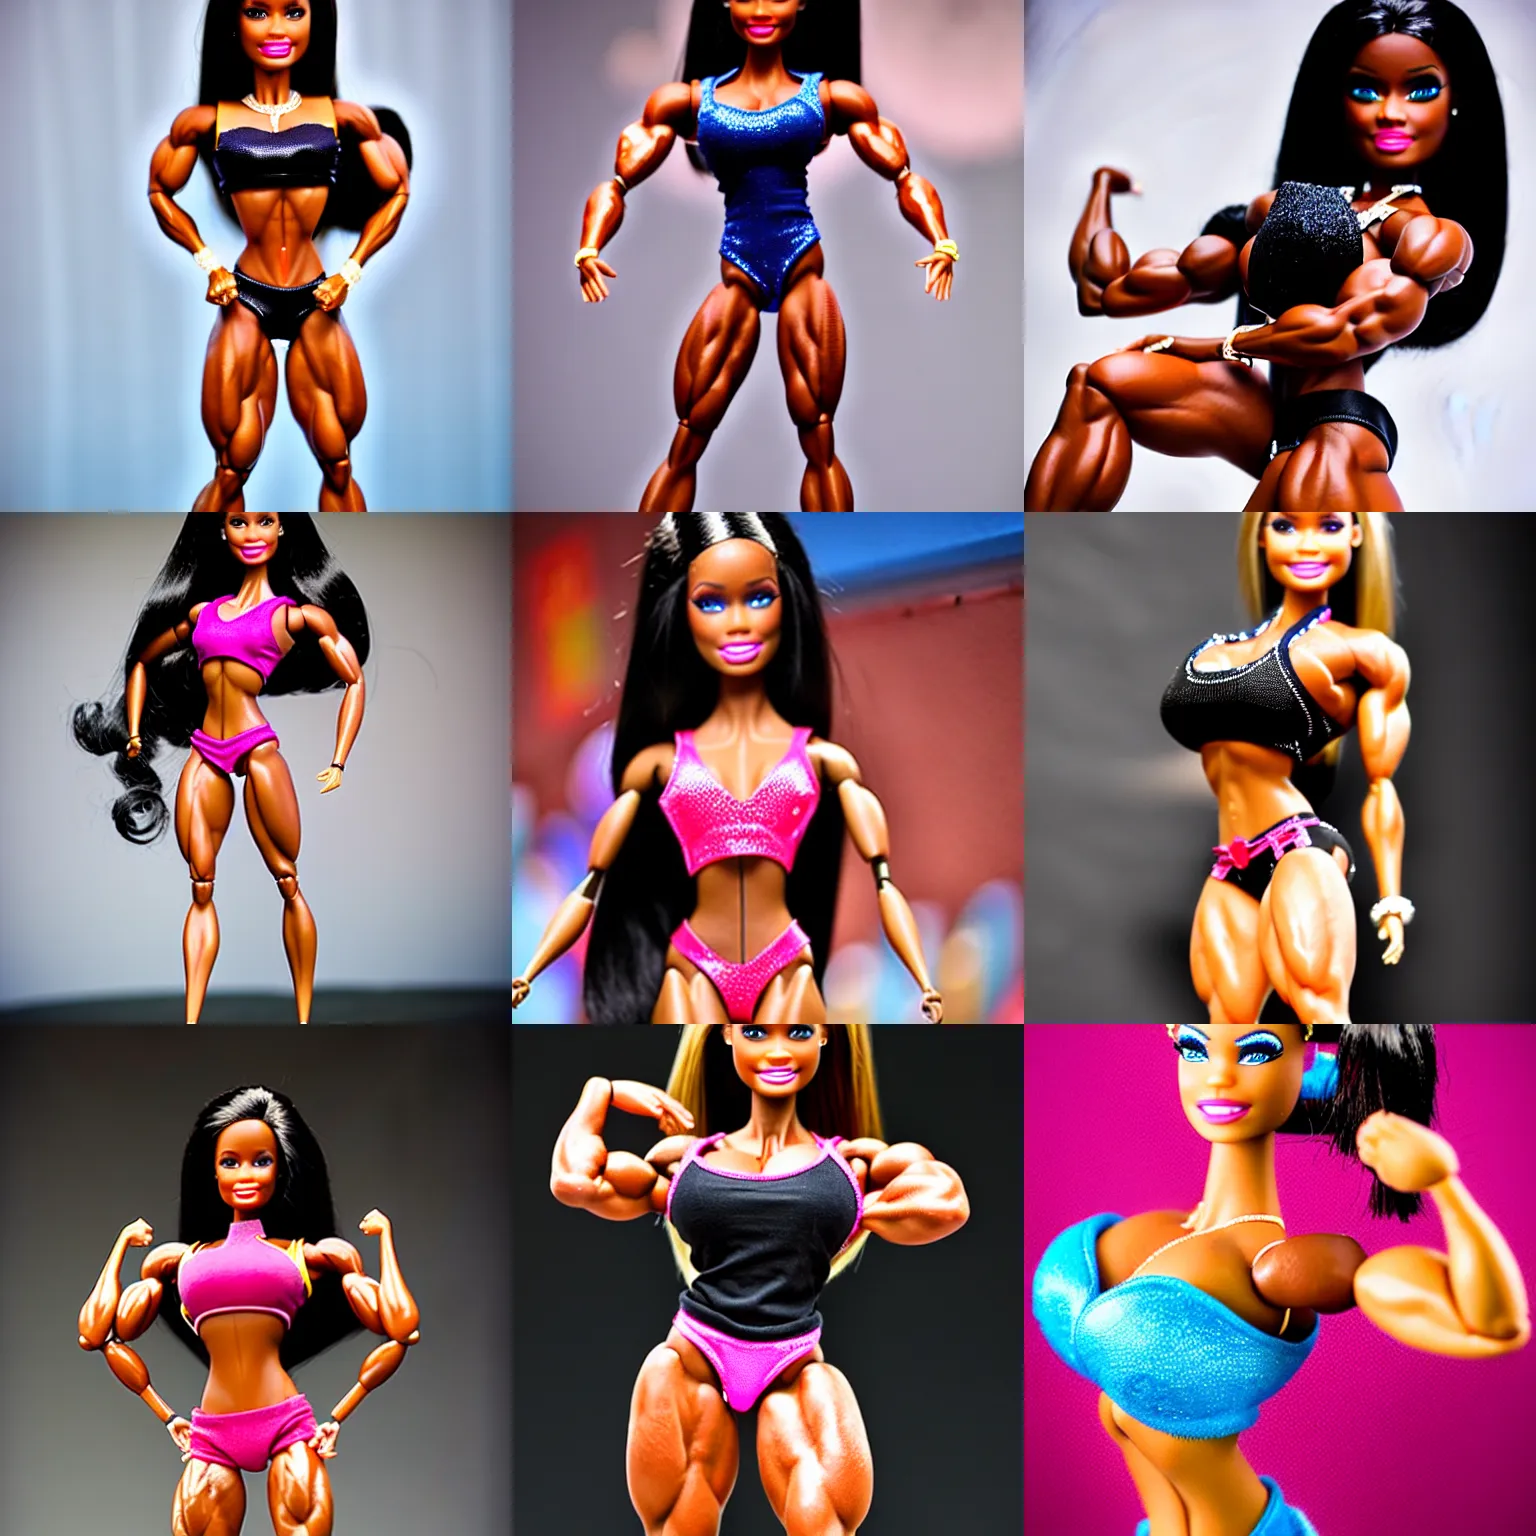 Prompt: super muscular barbie, black hair, bodybuilder contest, soft light photography